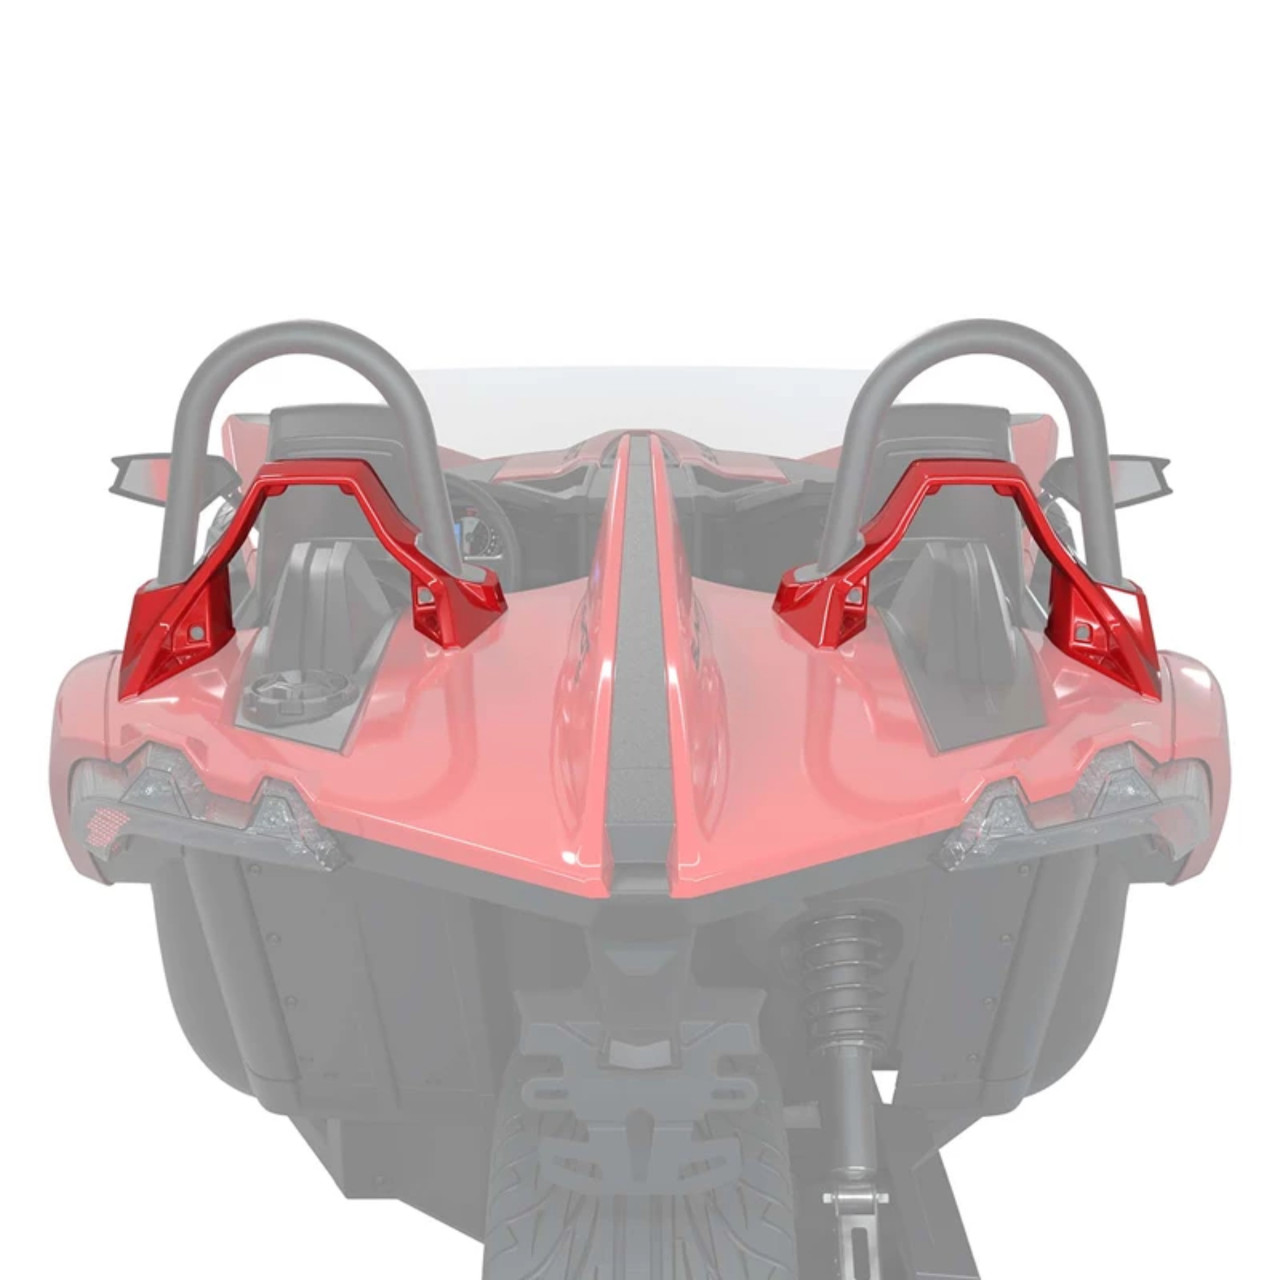 Polaris New OEM Slingshot Red Painted Lower Hoop Accent Kit, 2882419-292